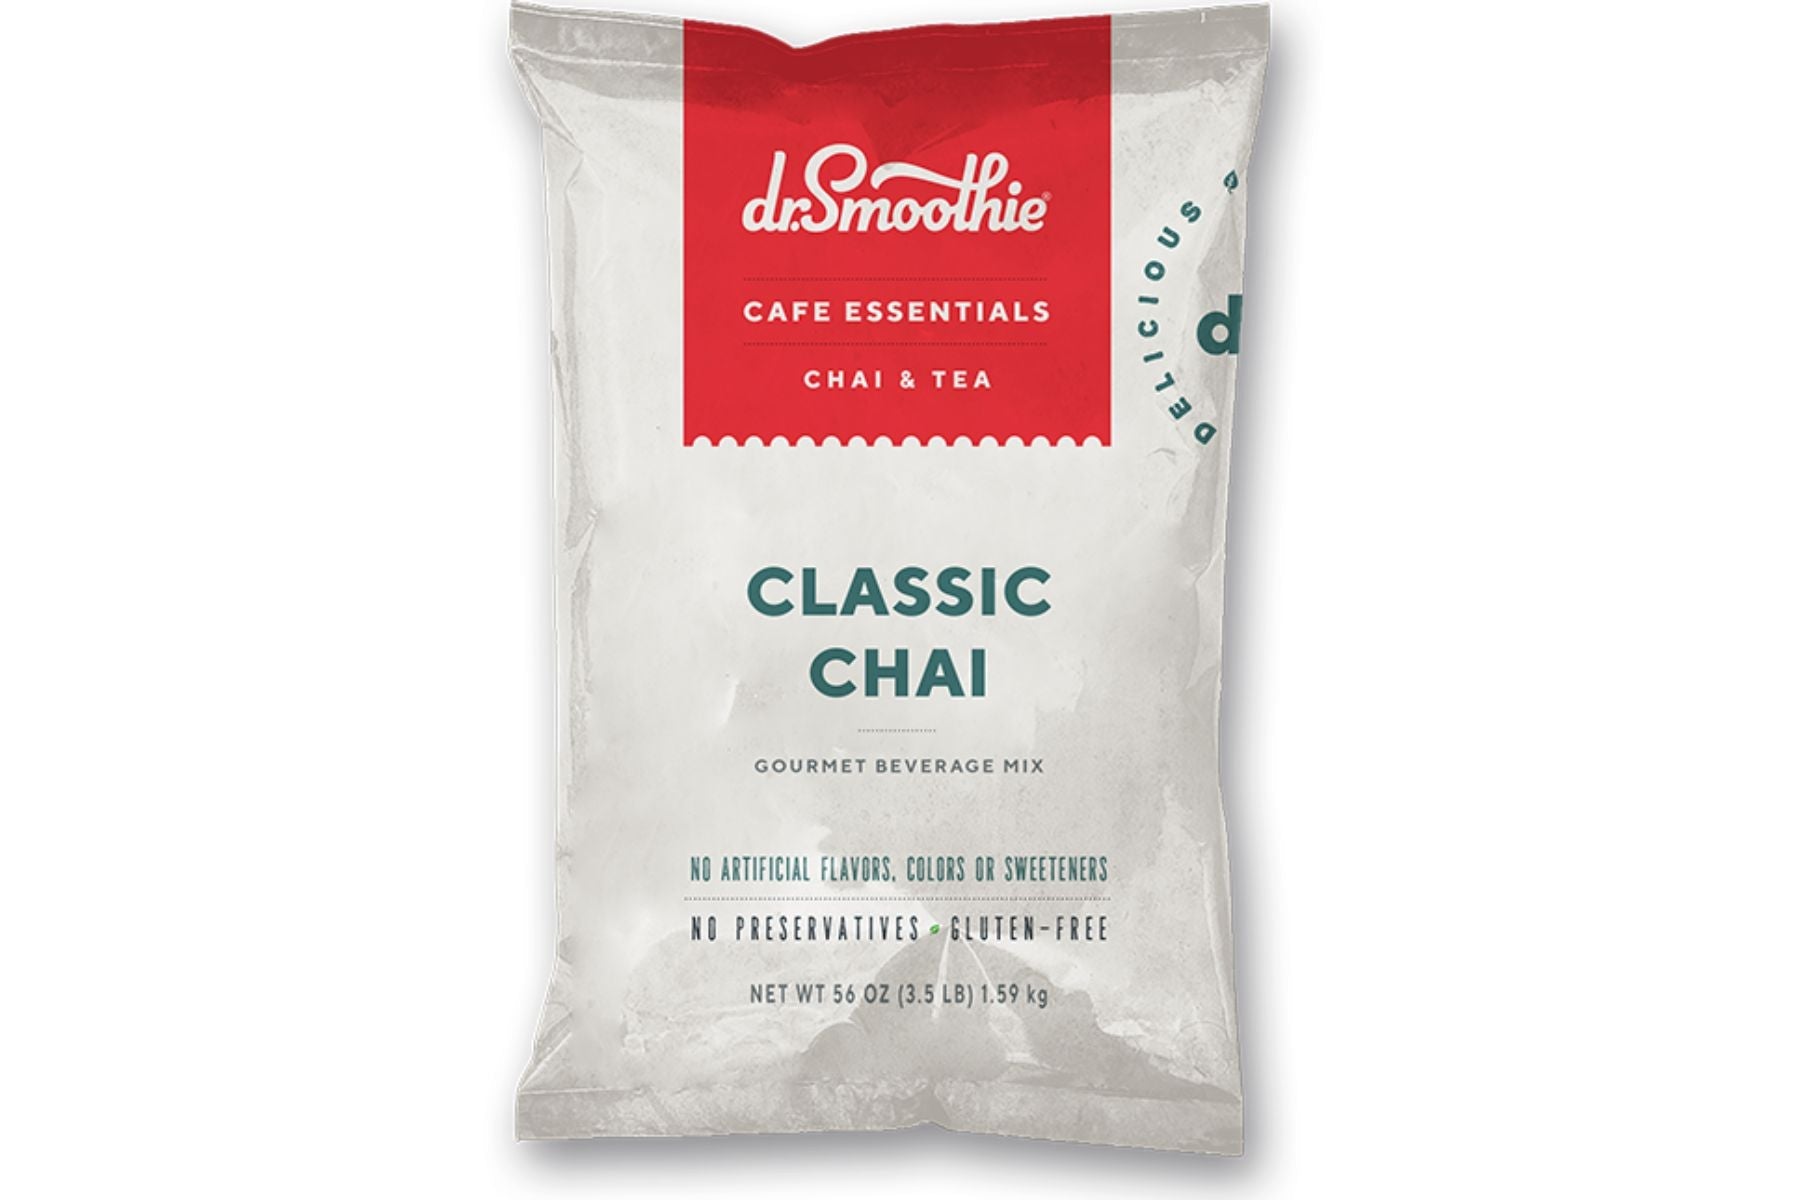 Dr. Smoothie Cafe Essentials Chai & Tea - 25lb Bulk Box: Classic Chai